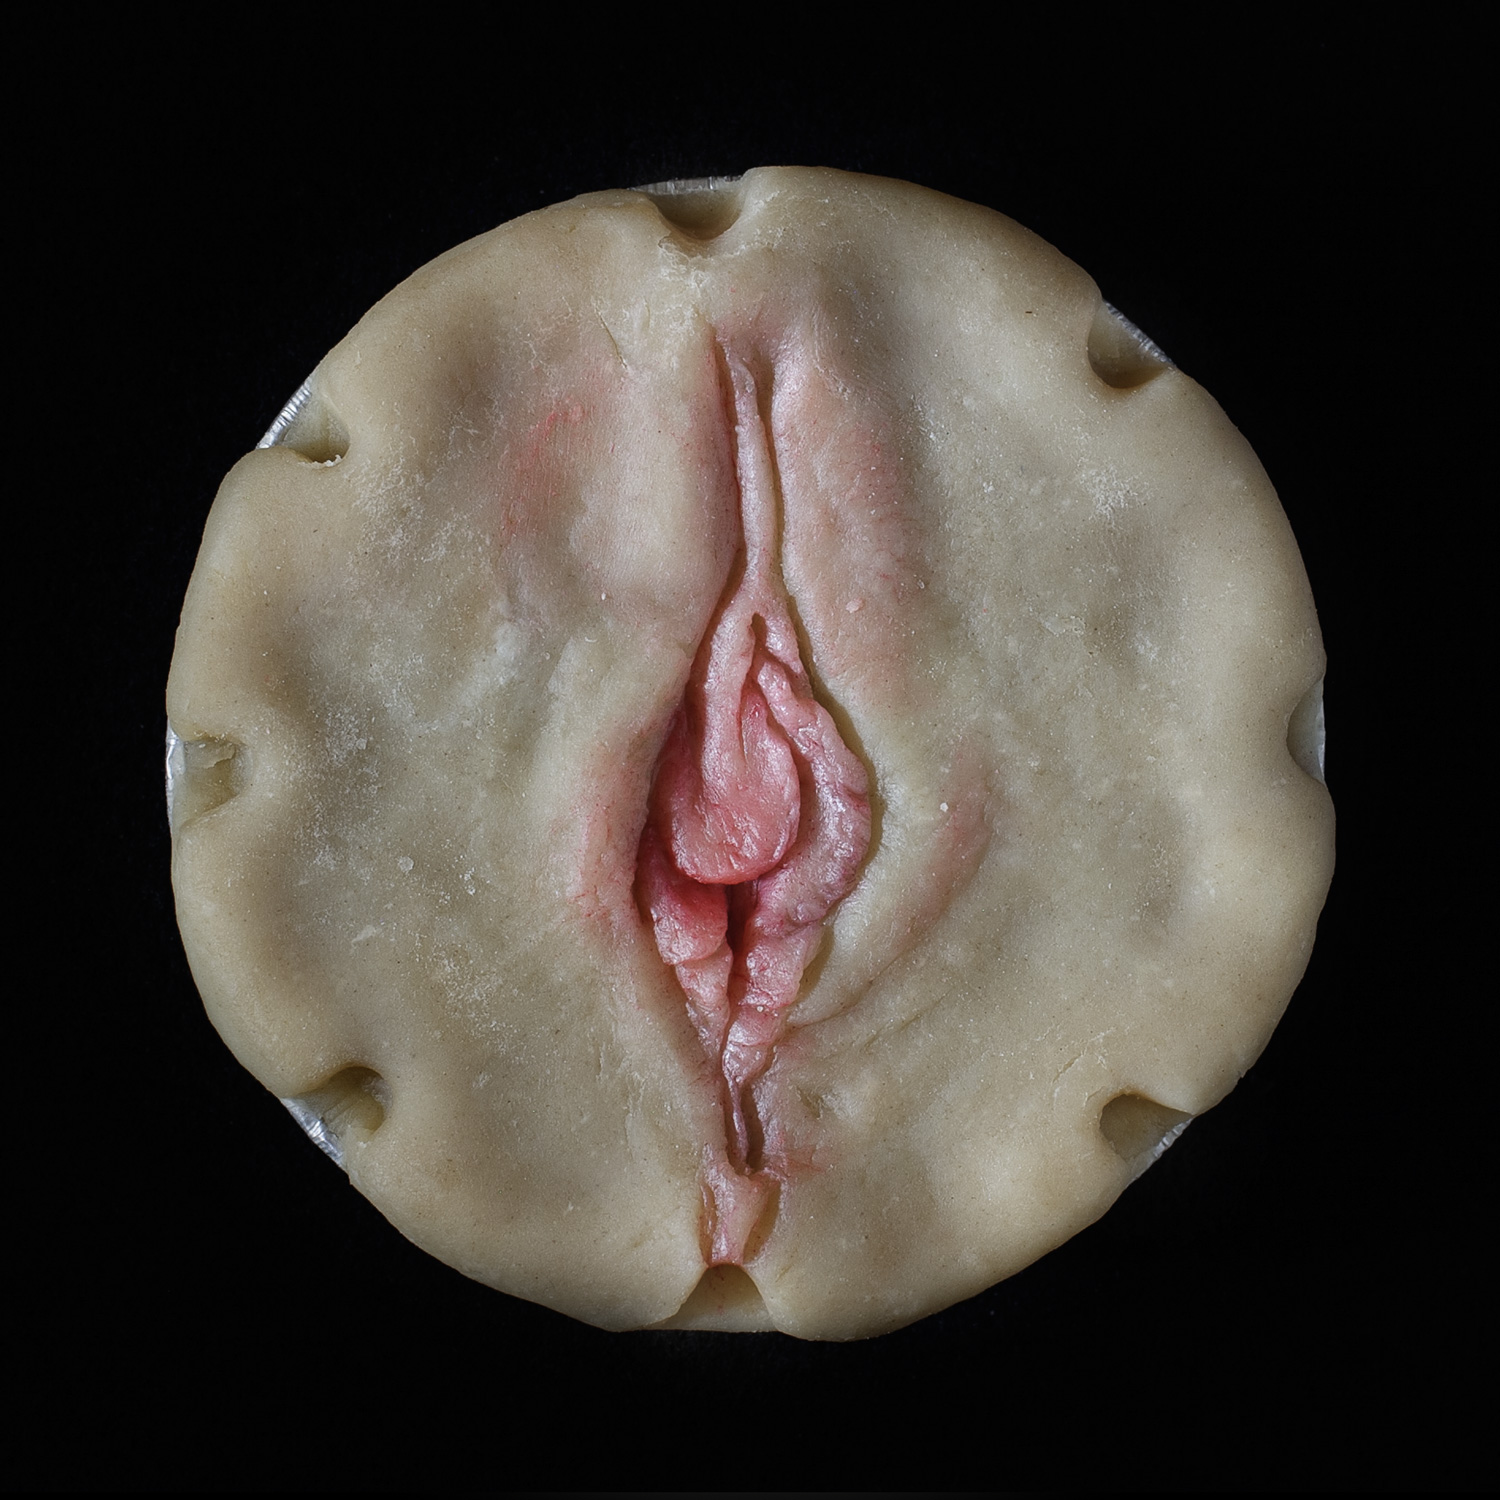 A cherry pie on a black background. The pie art depics a pink vulva